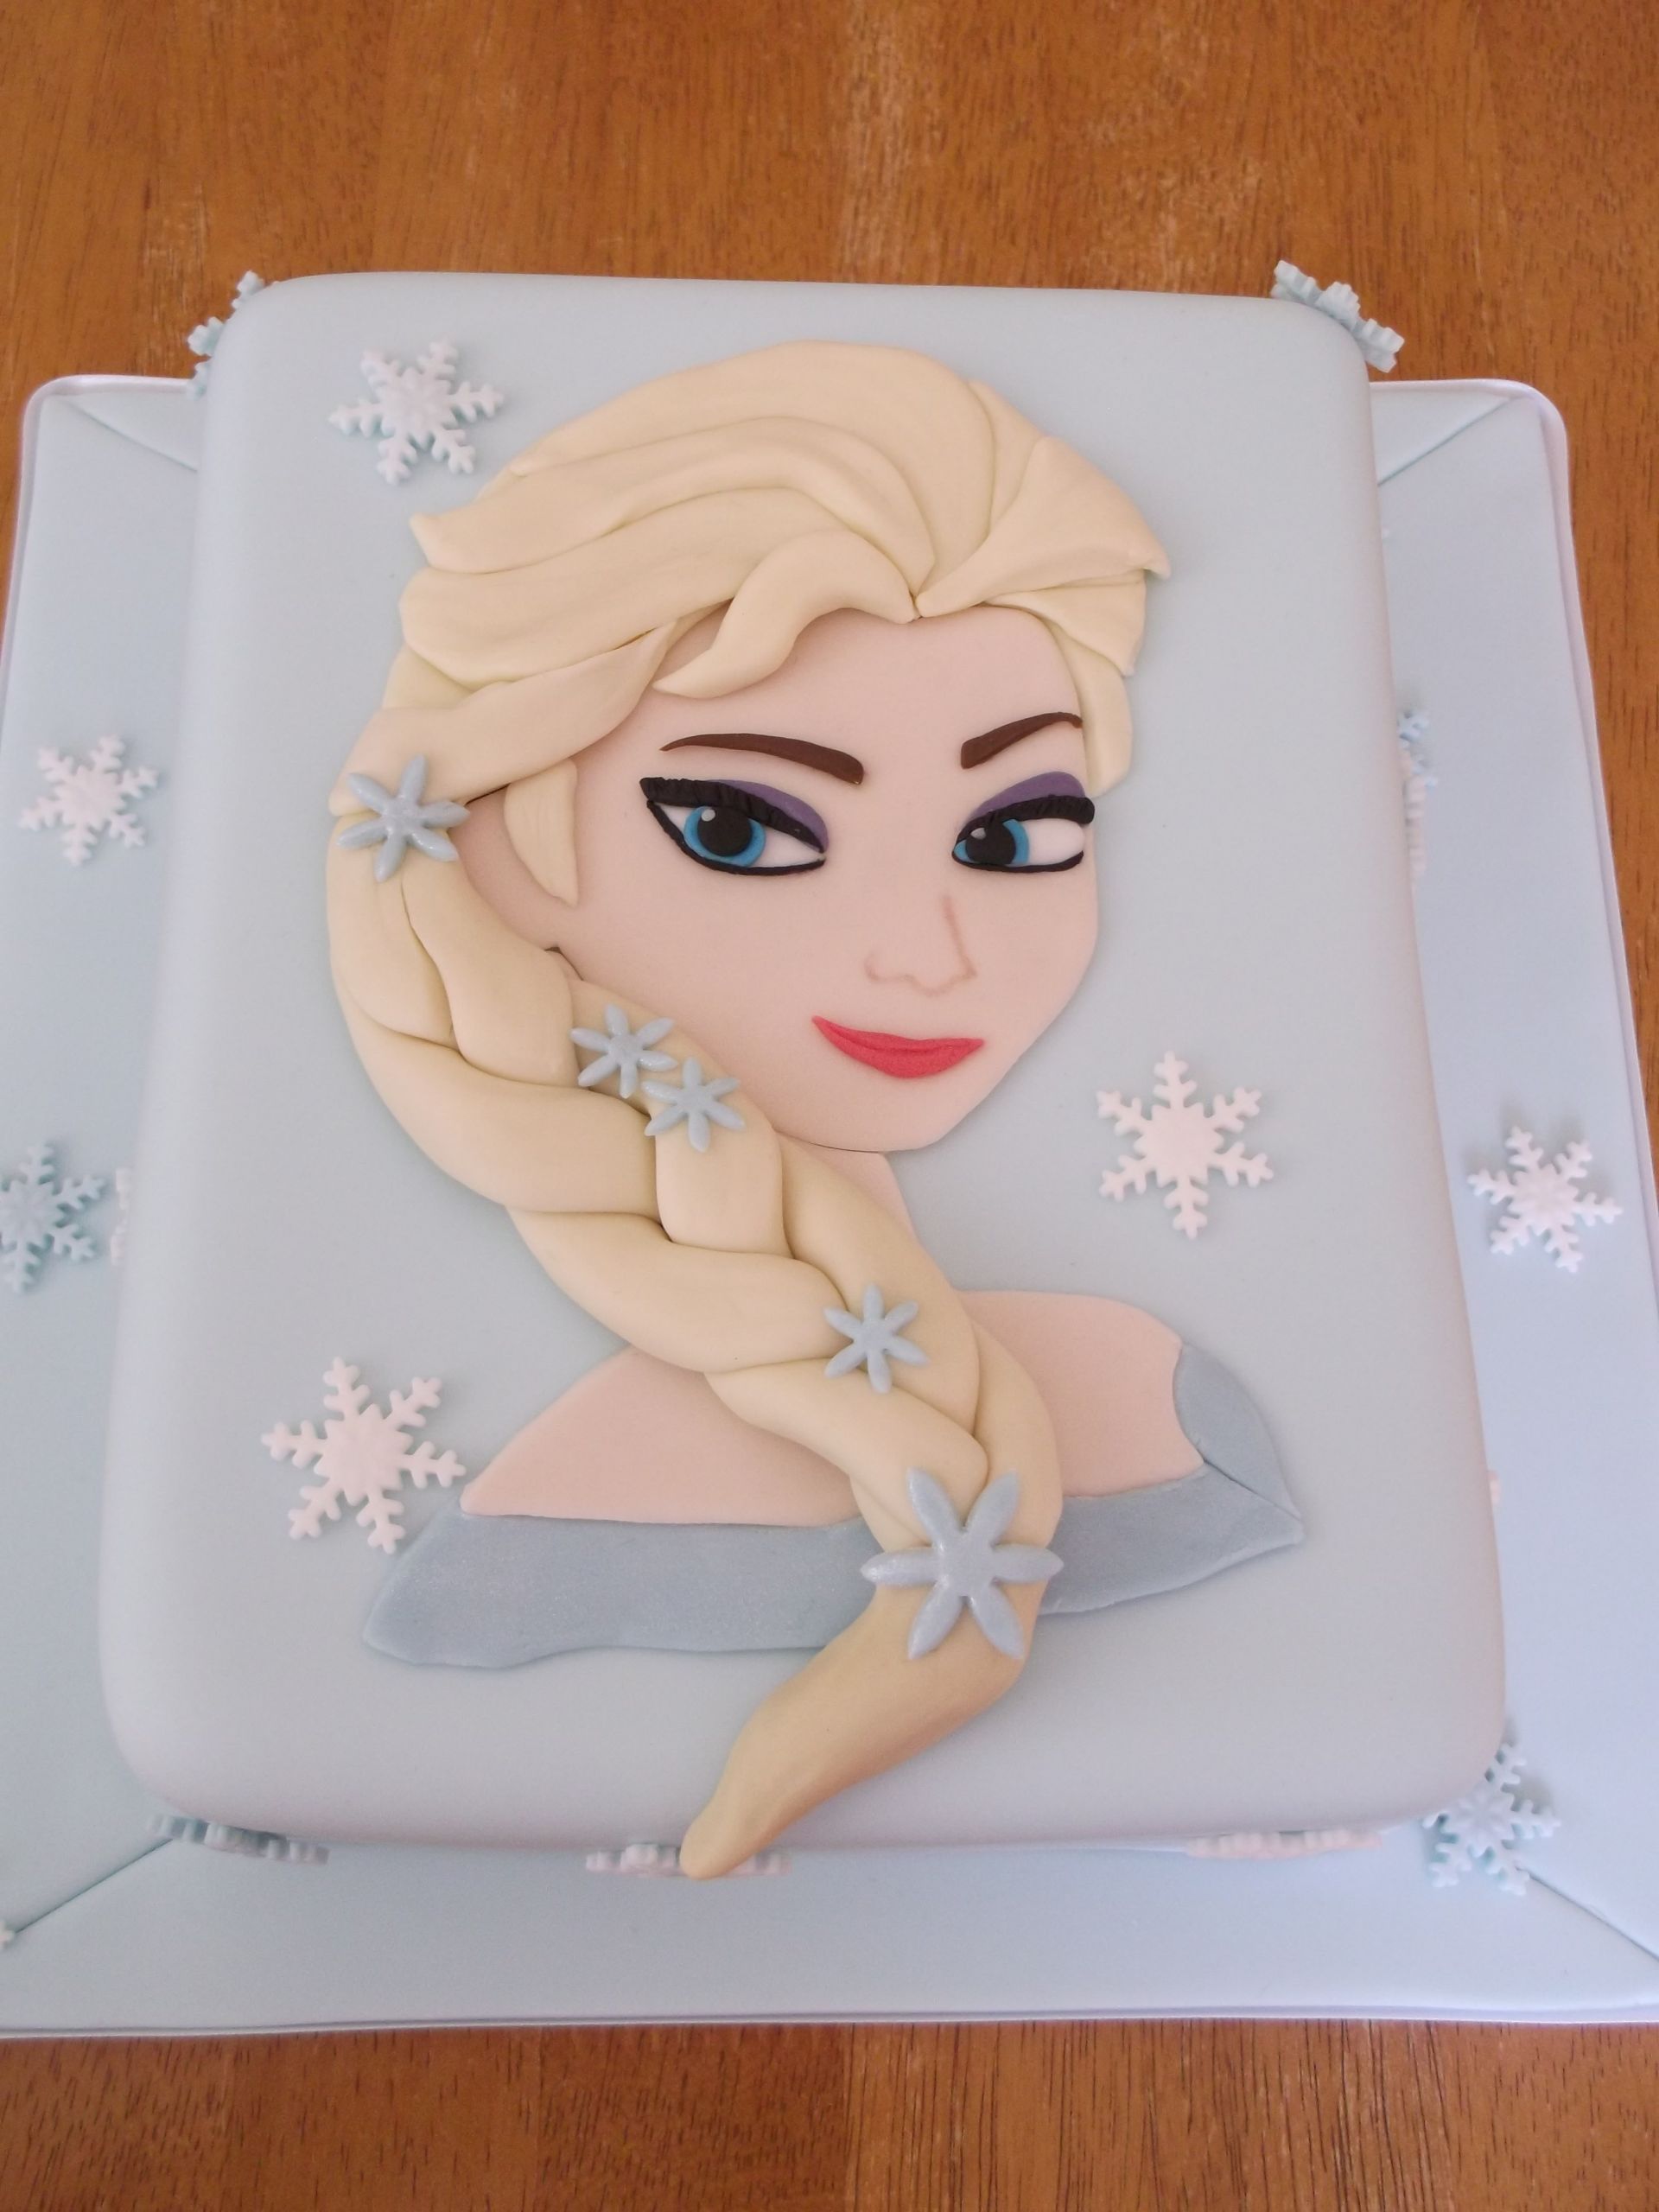 Elsa Birthday Cakes
 Elsa Cake CakeCentral